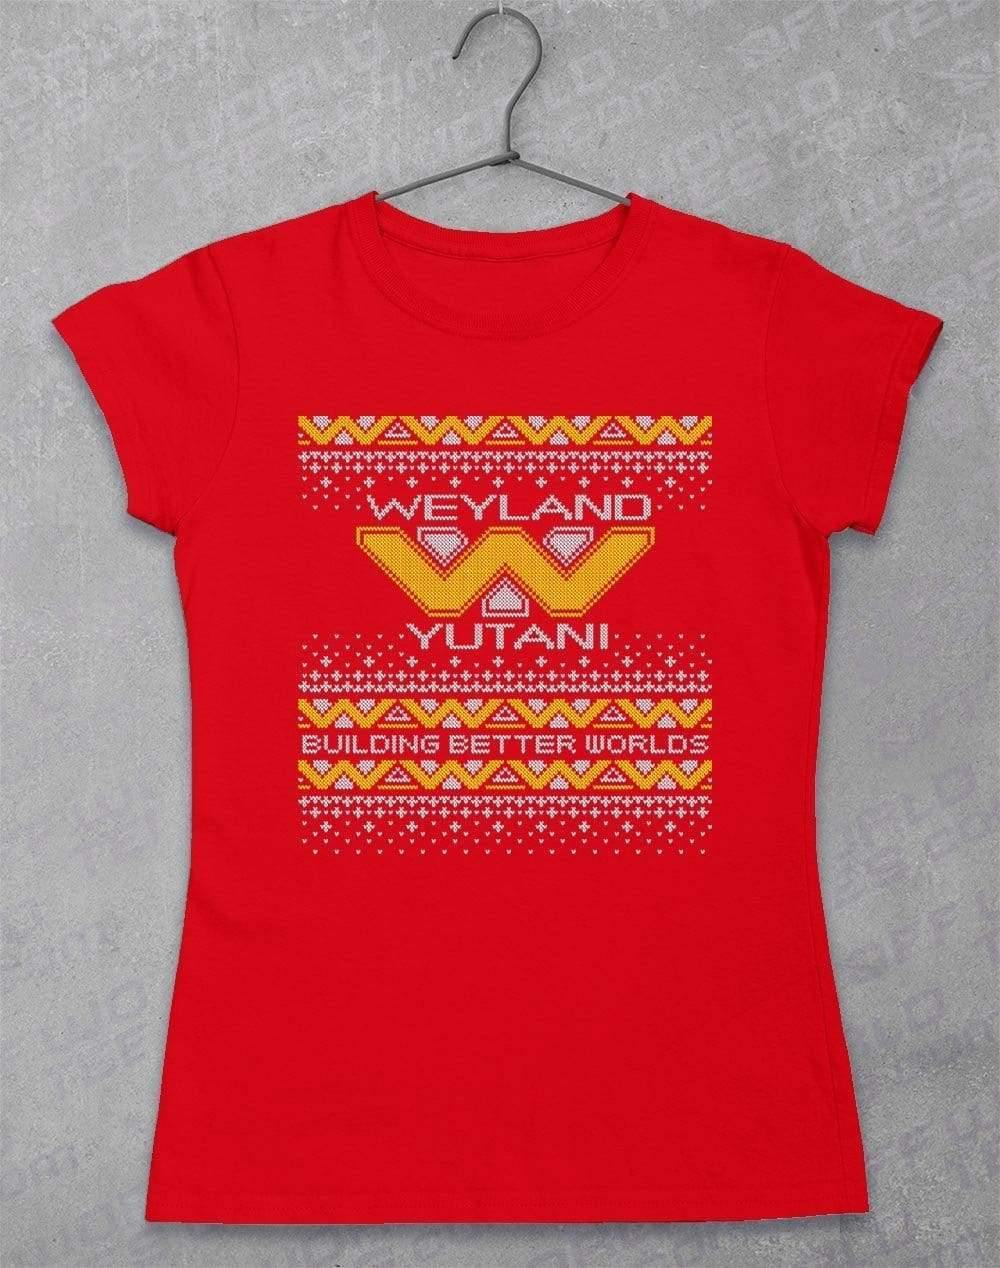 Weyland Yutani Festive Knitted-Look Women's T-Shirt 8-10 / Red  - Off World Tees